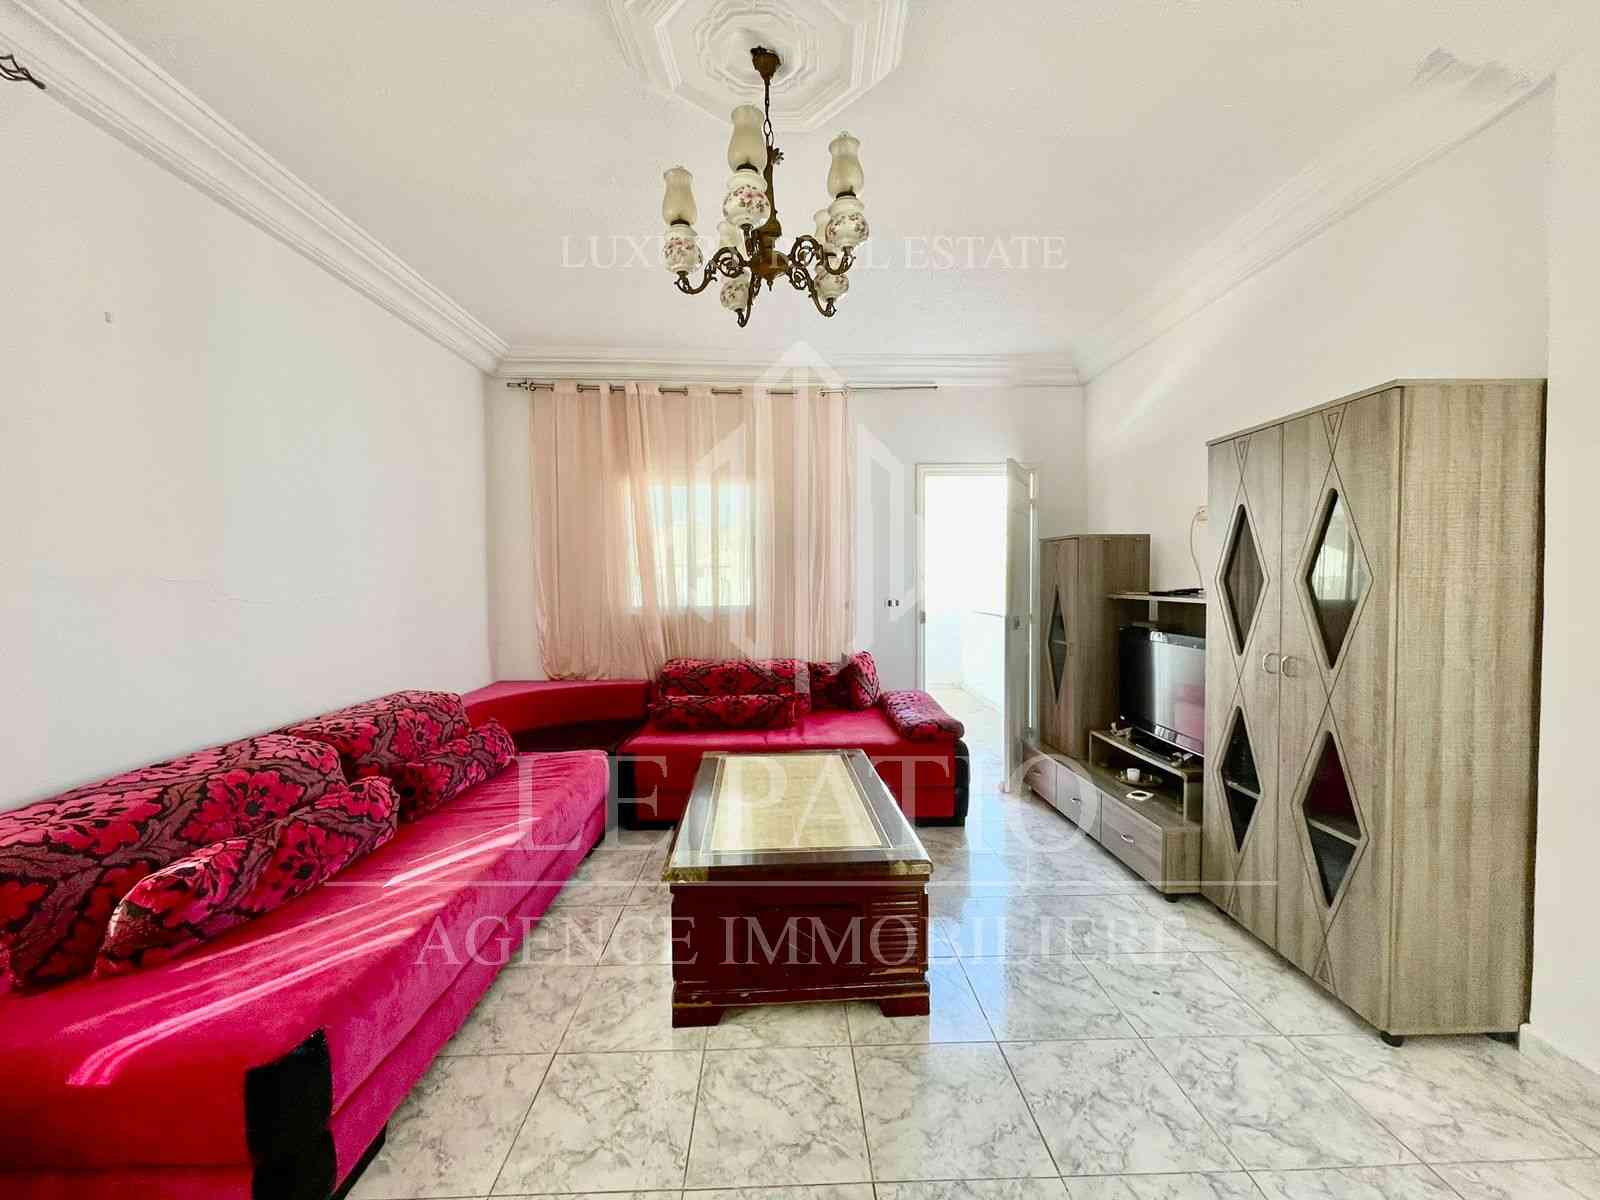 La Marsa Marsa Safsaf Location Appart. 2 pices Etage de villa s1 meubl